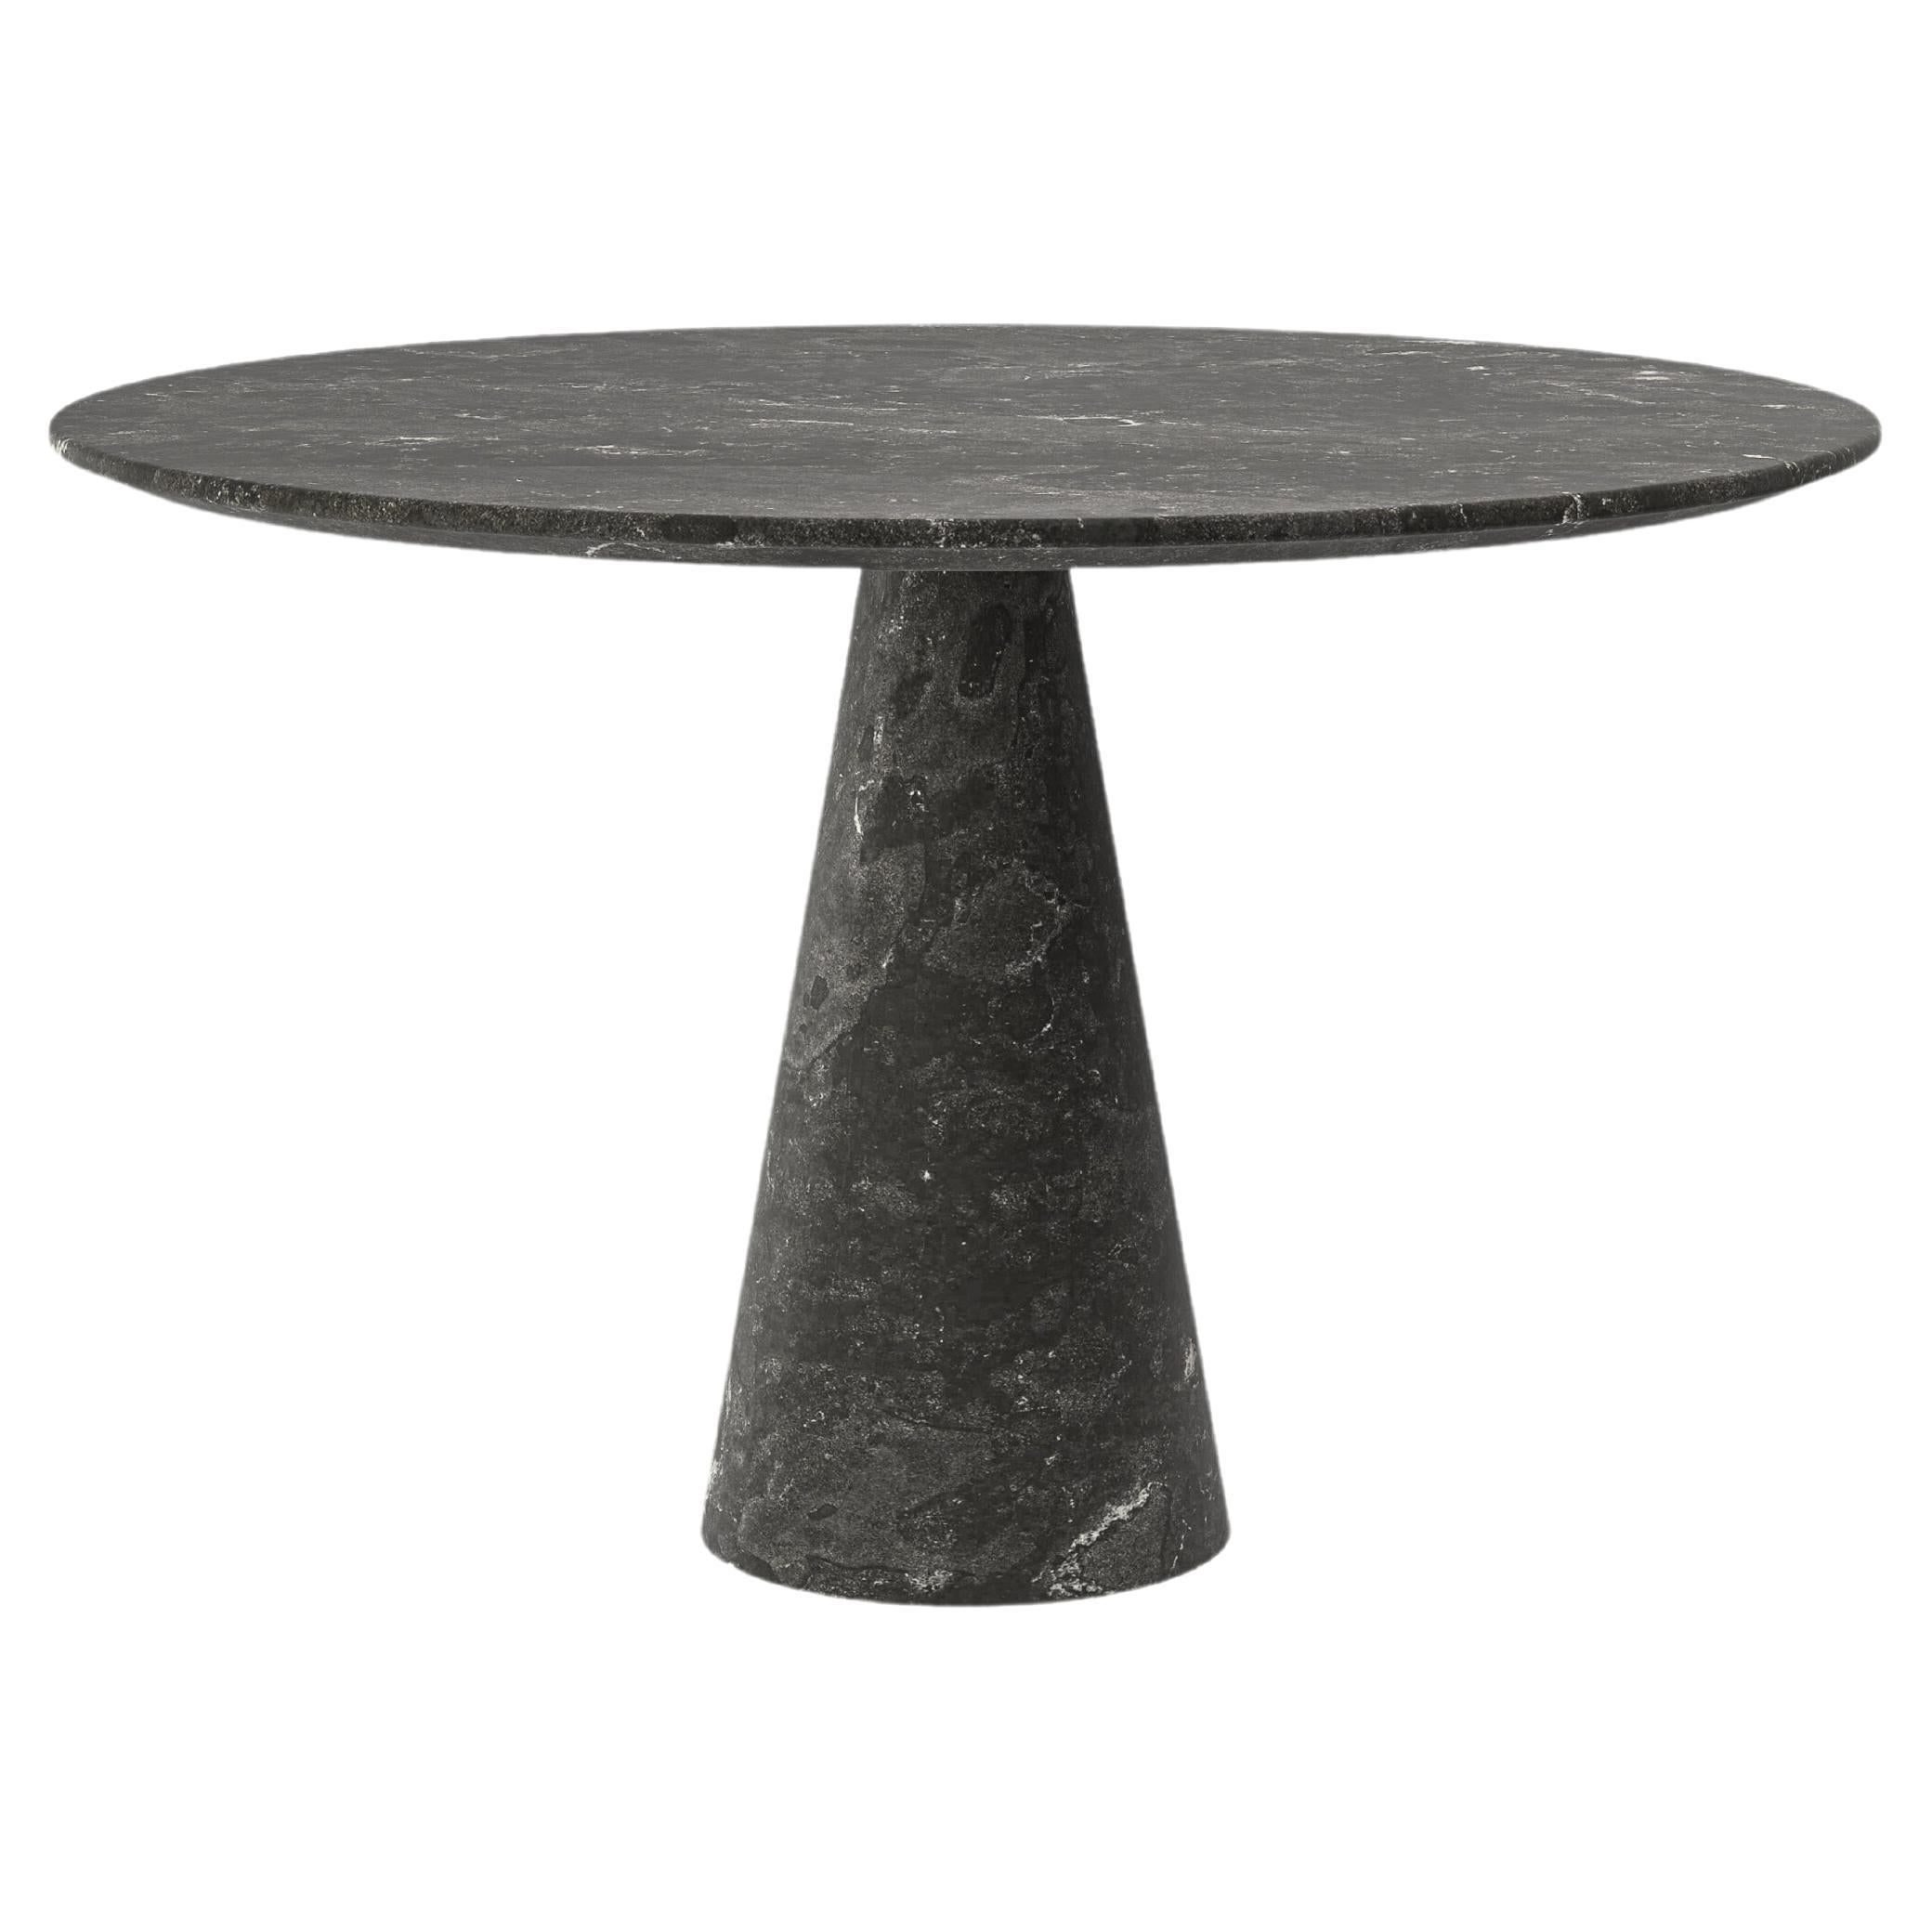 FORM(LA) Cono Table de salle à manger ronde 36L x 36W x 30H Nero Petite Granite en vente